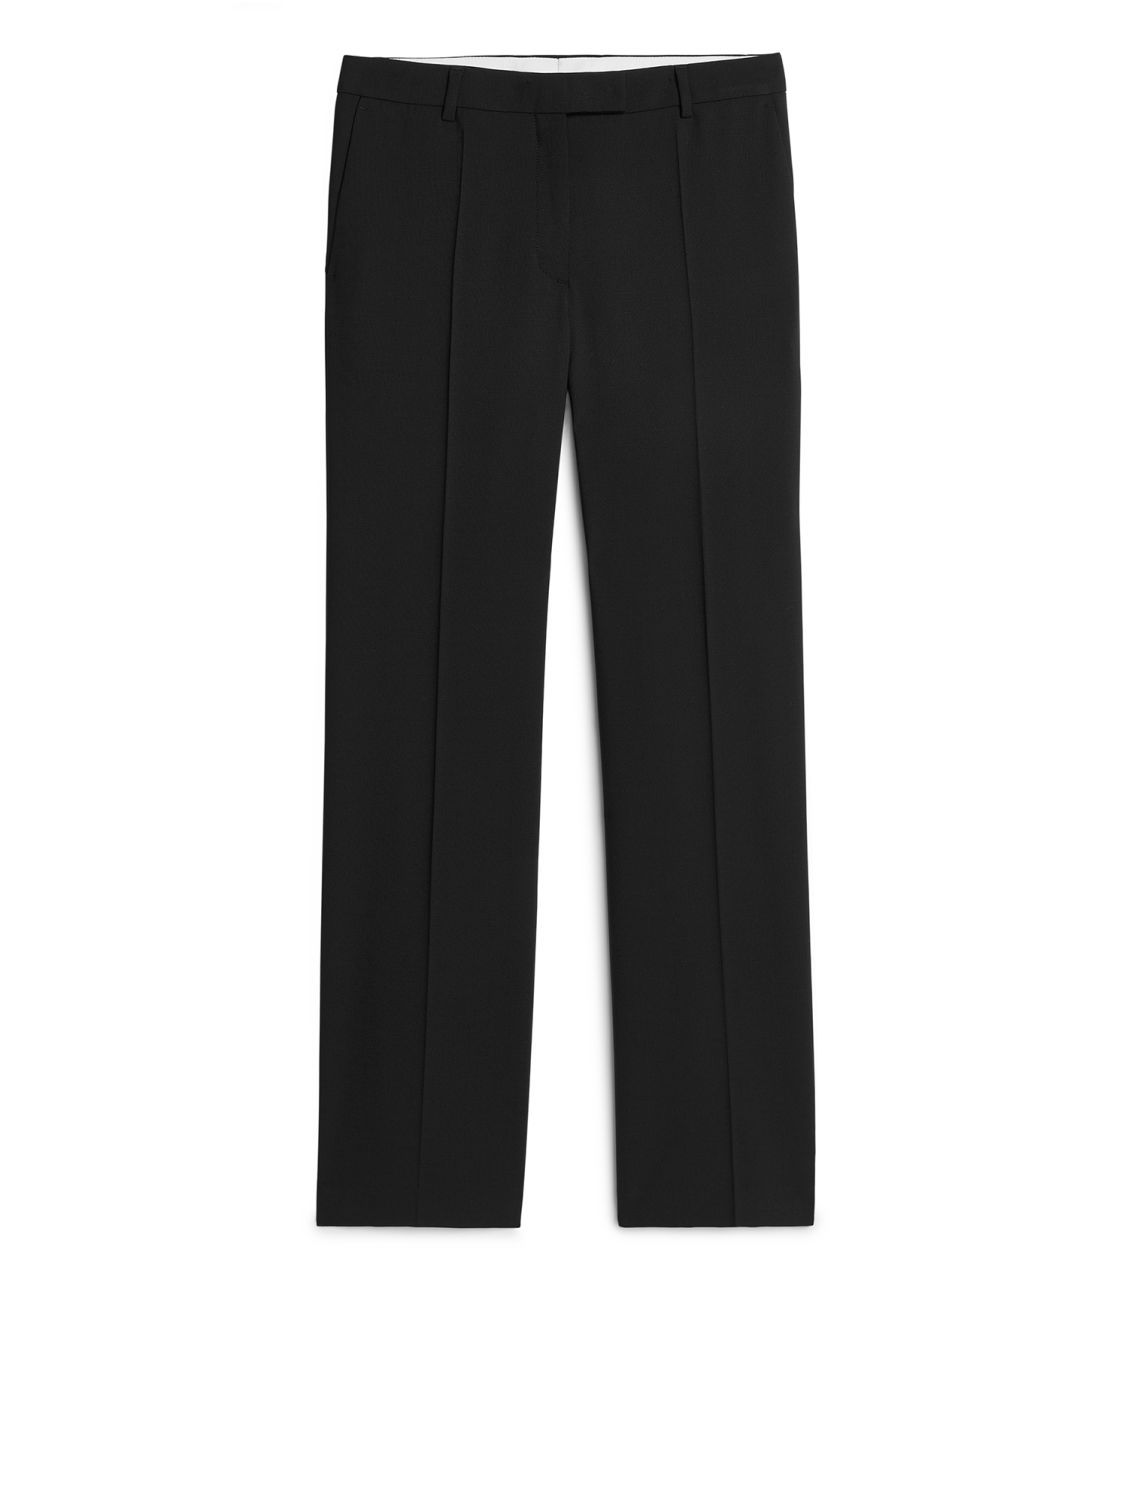 Stretch Wool Trousers - Black - Trousers - ARKET GB | ARKET